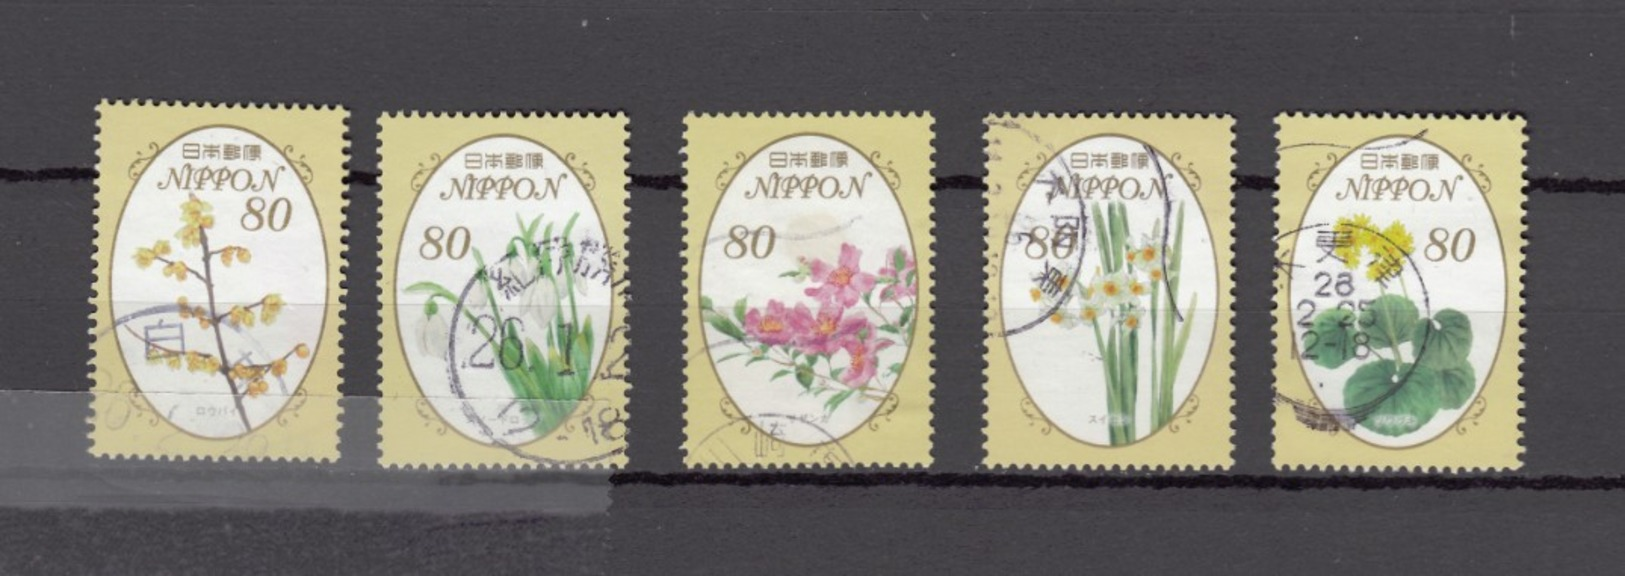 Japan 2013 - Seasonal Flowers Series 8 82 Yen, Michelnr. 6654-58 - Gebruikt